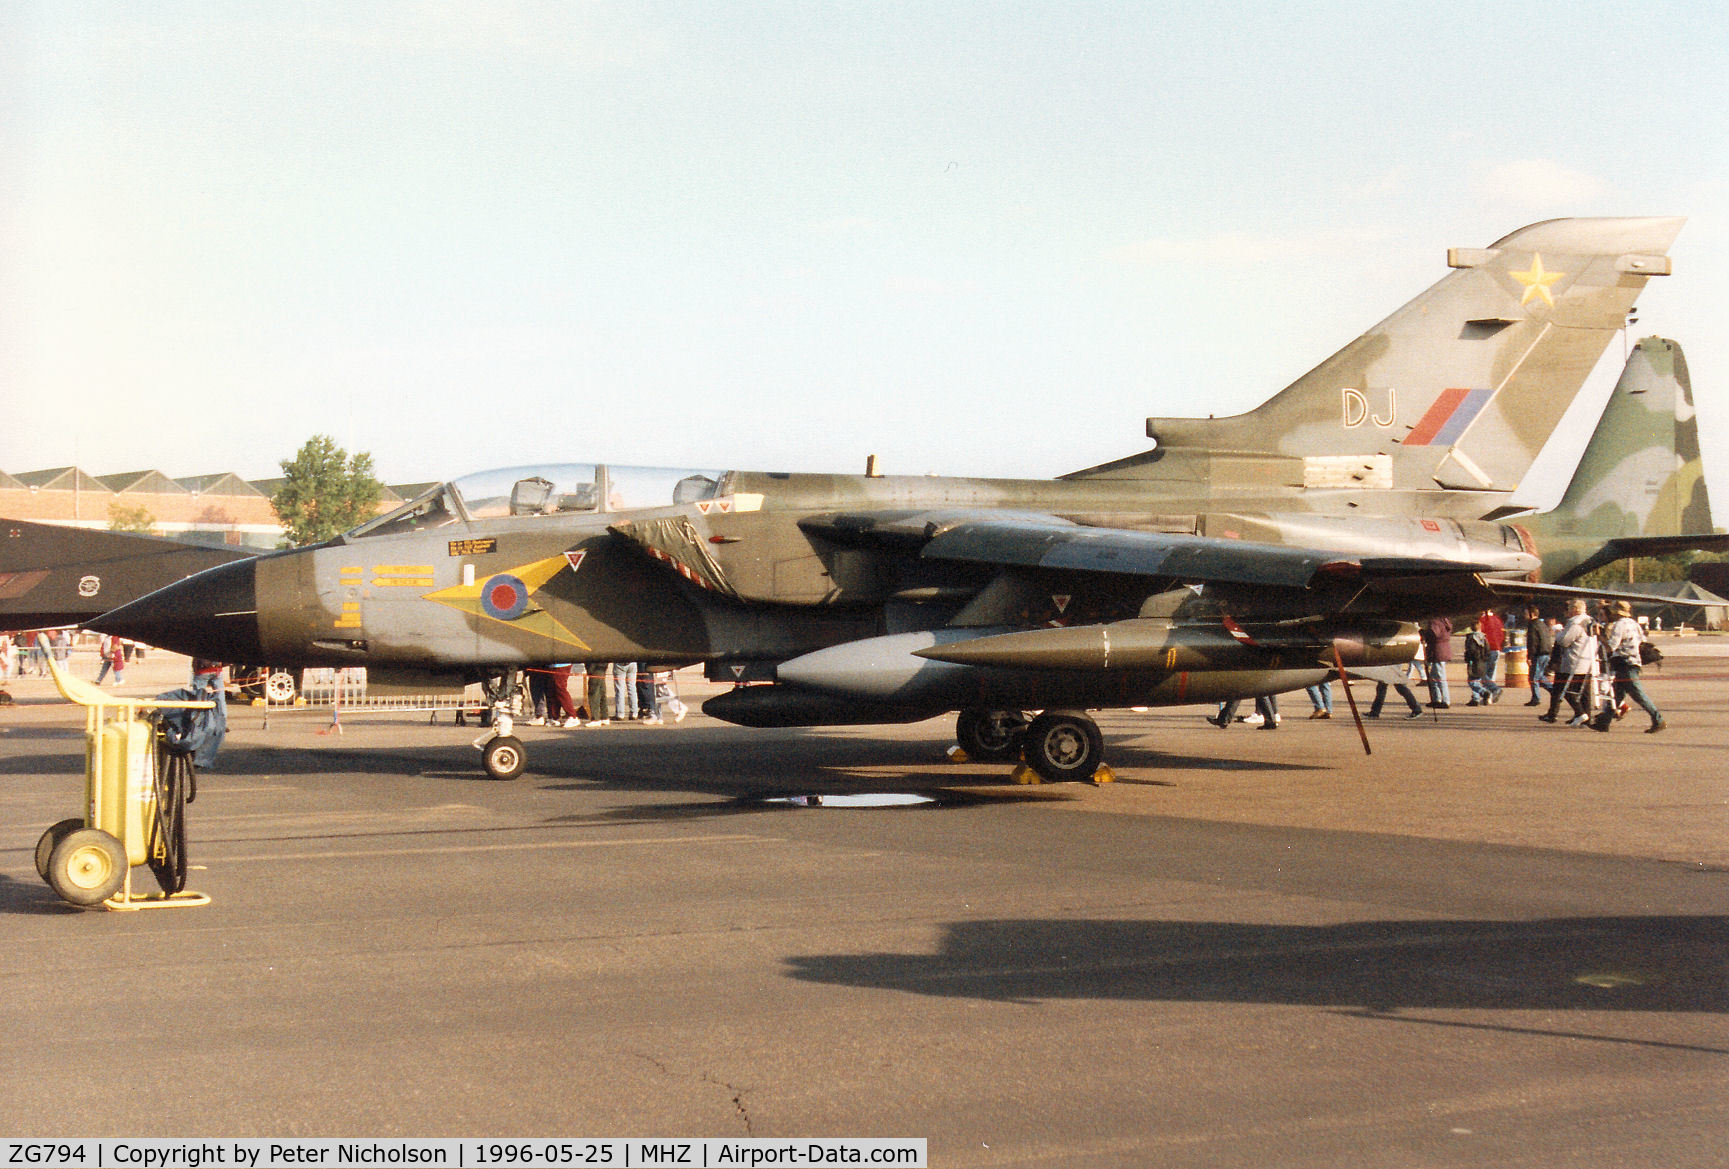 ZG794, 1992 Panavia Tornado GR.1 C/N 916/BS192/3457, Tornado GR.1 of 31 Squadron at RAF Bruggen on display at the 1996 RAF Mildenhall Air Fete.